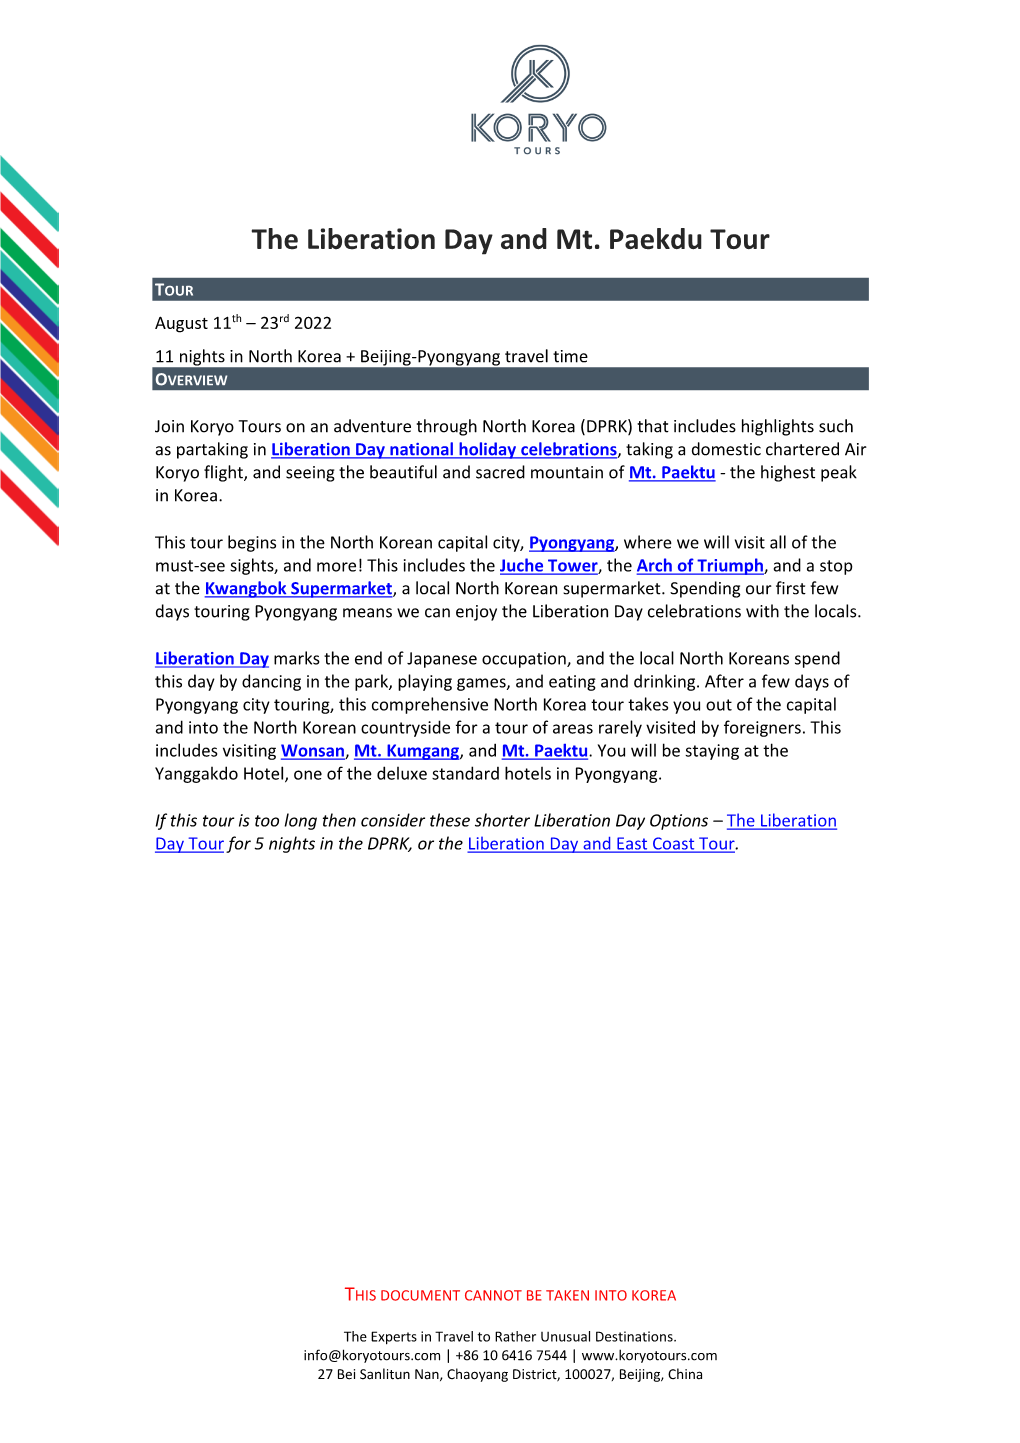 The Liberation Day and Mt. Paekdu Tour